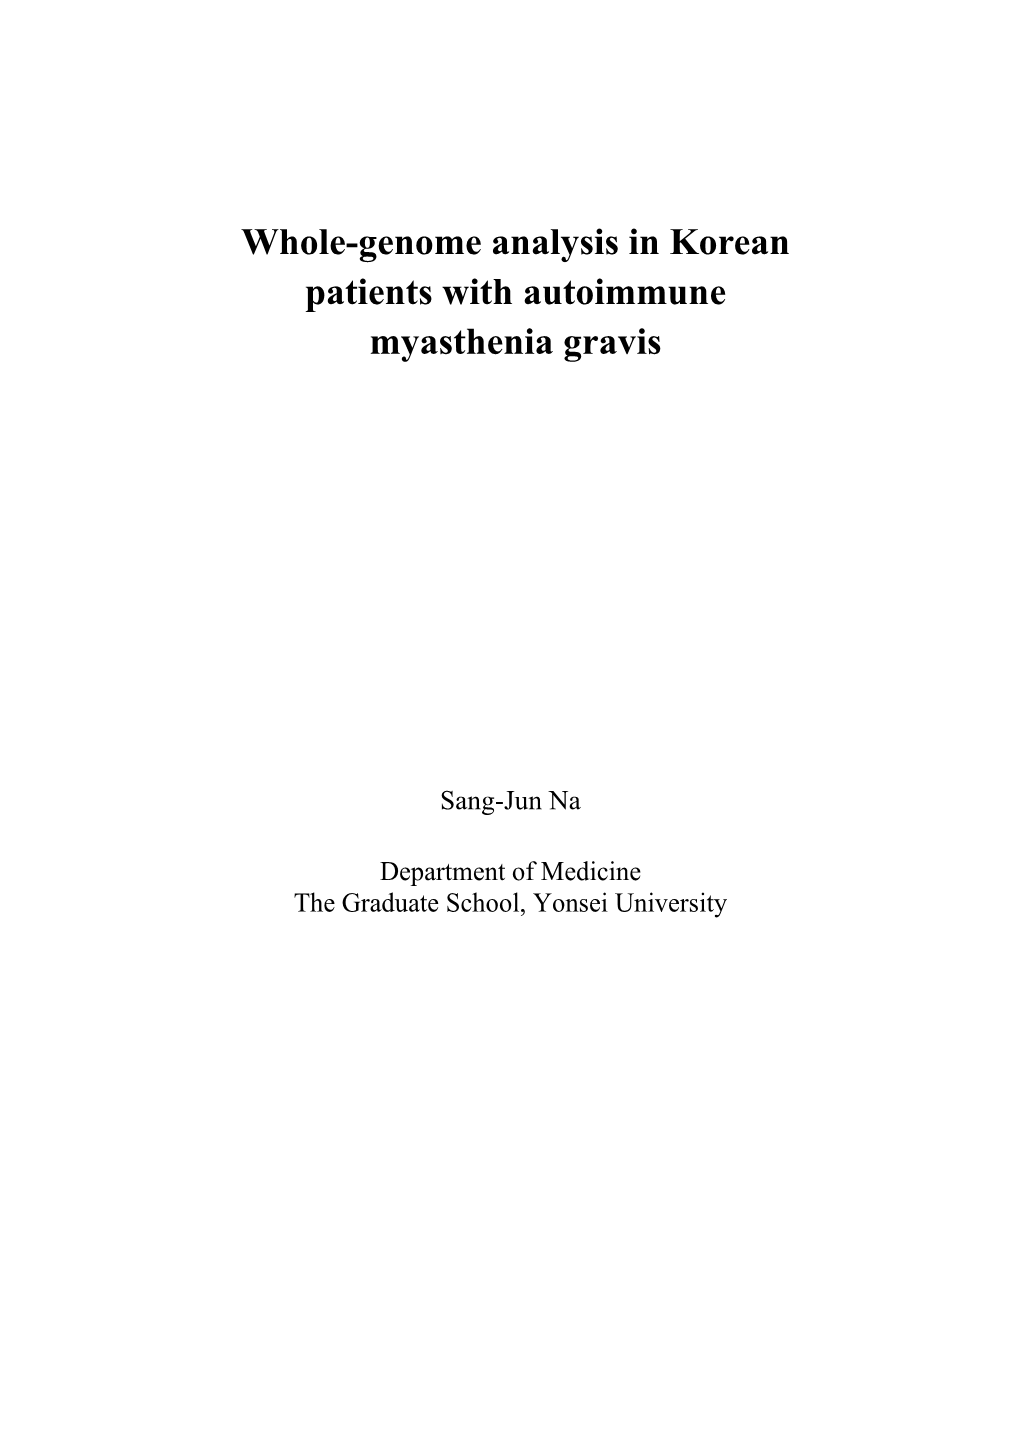 Whole-Genome Analysis in Korean Patients with Autoimmune Myasthenia Gravis